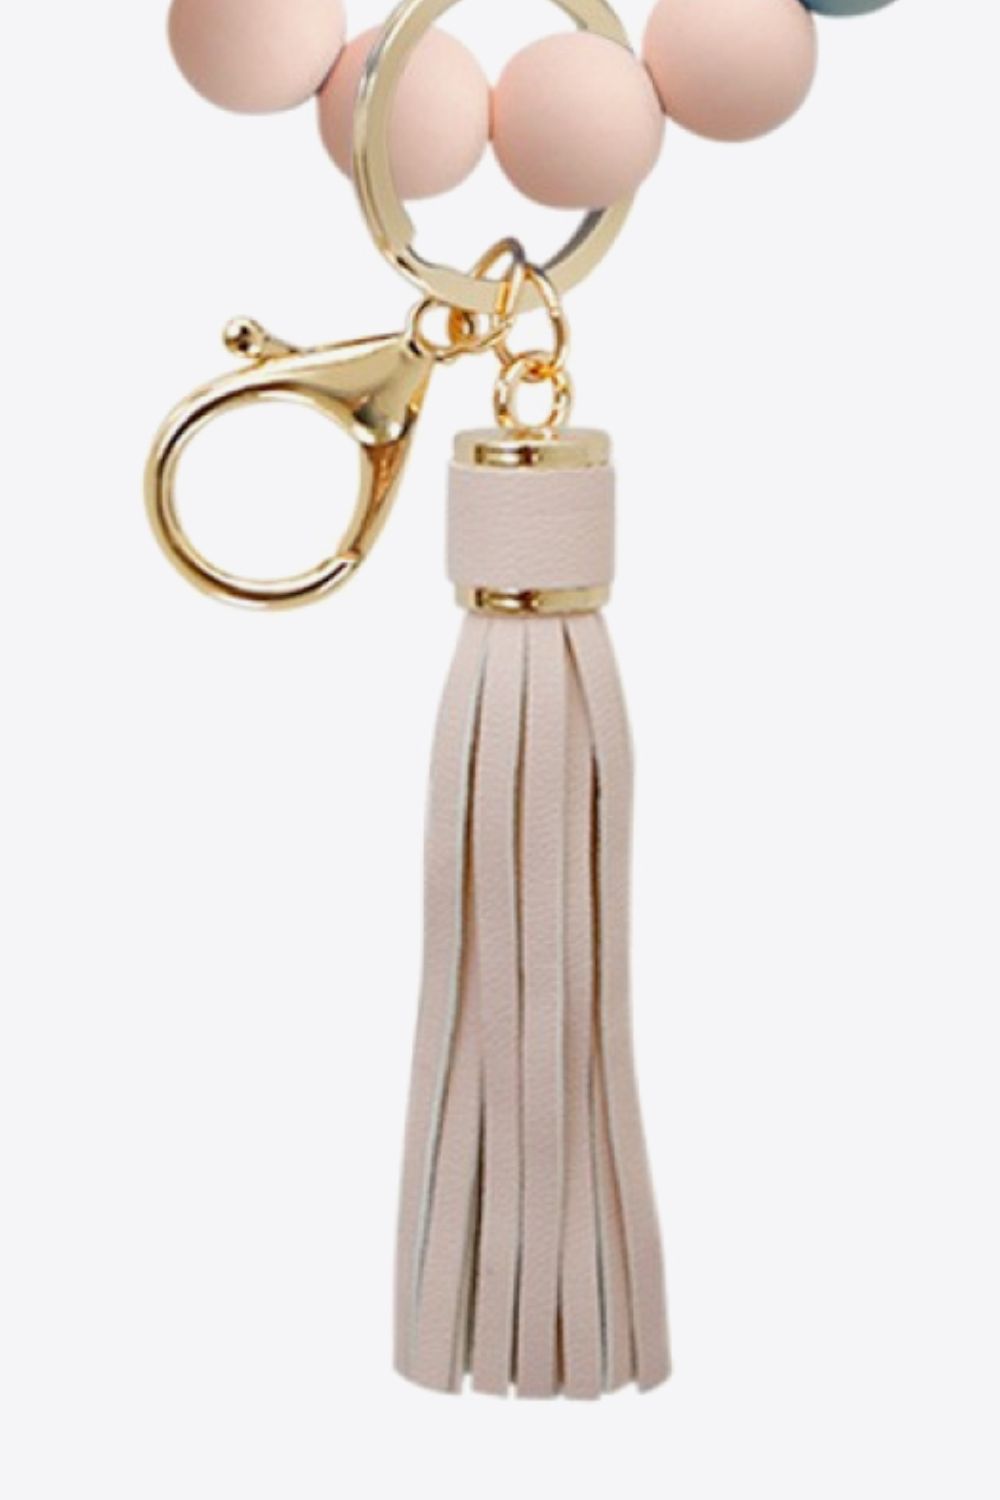 Trendsi Cupid Beauty Supplies Keychains LOVE Beaded Keychain with Tassel